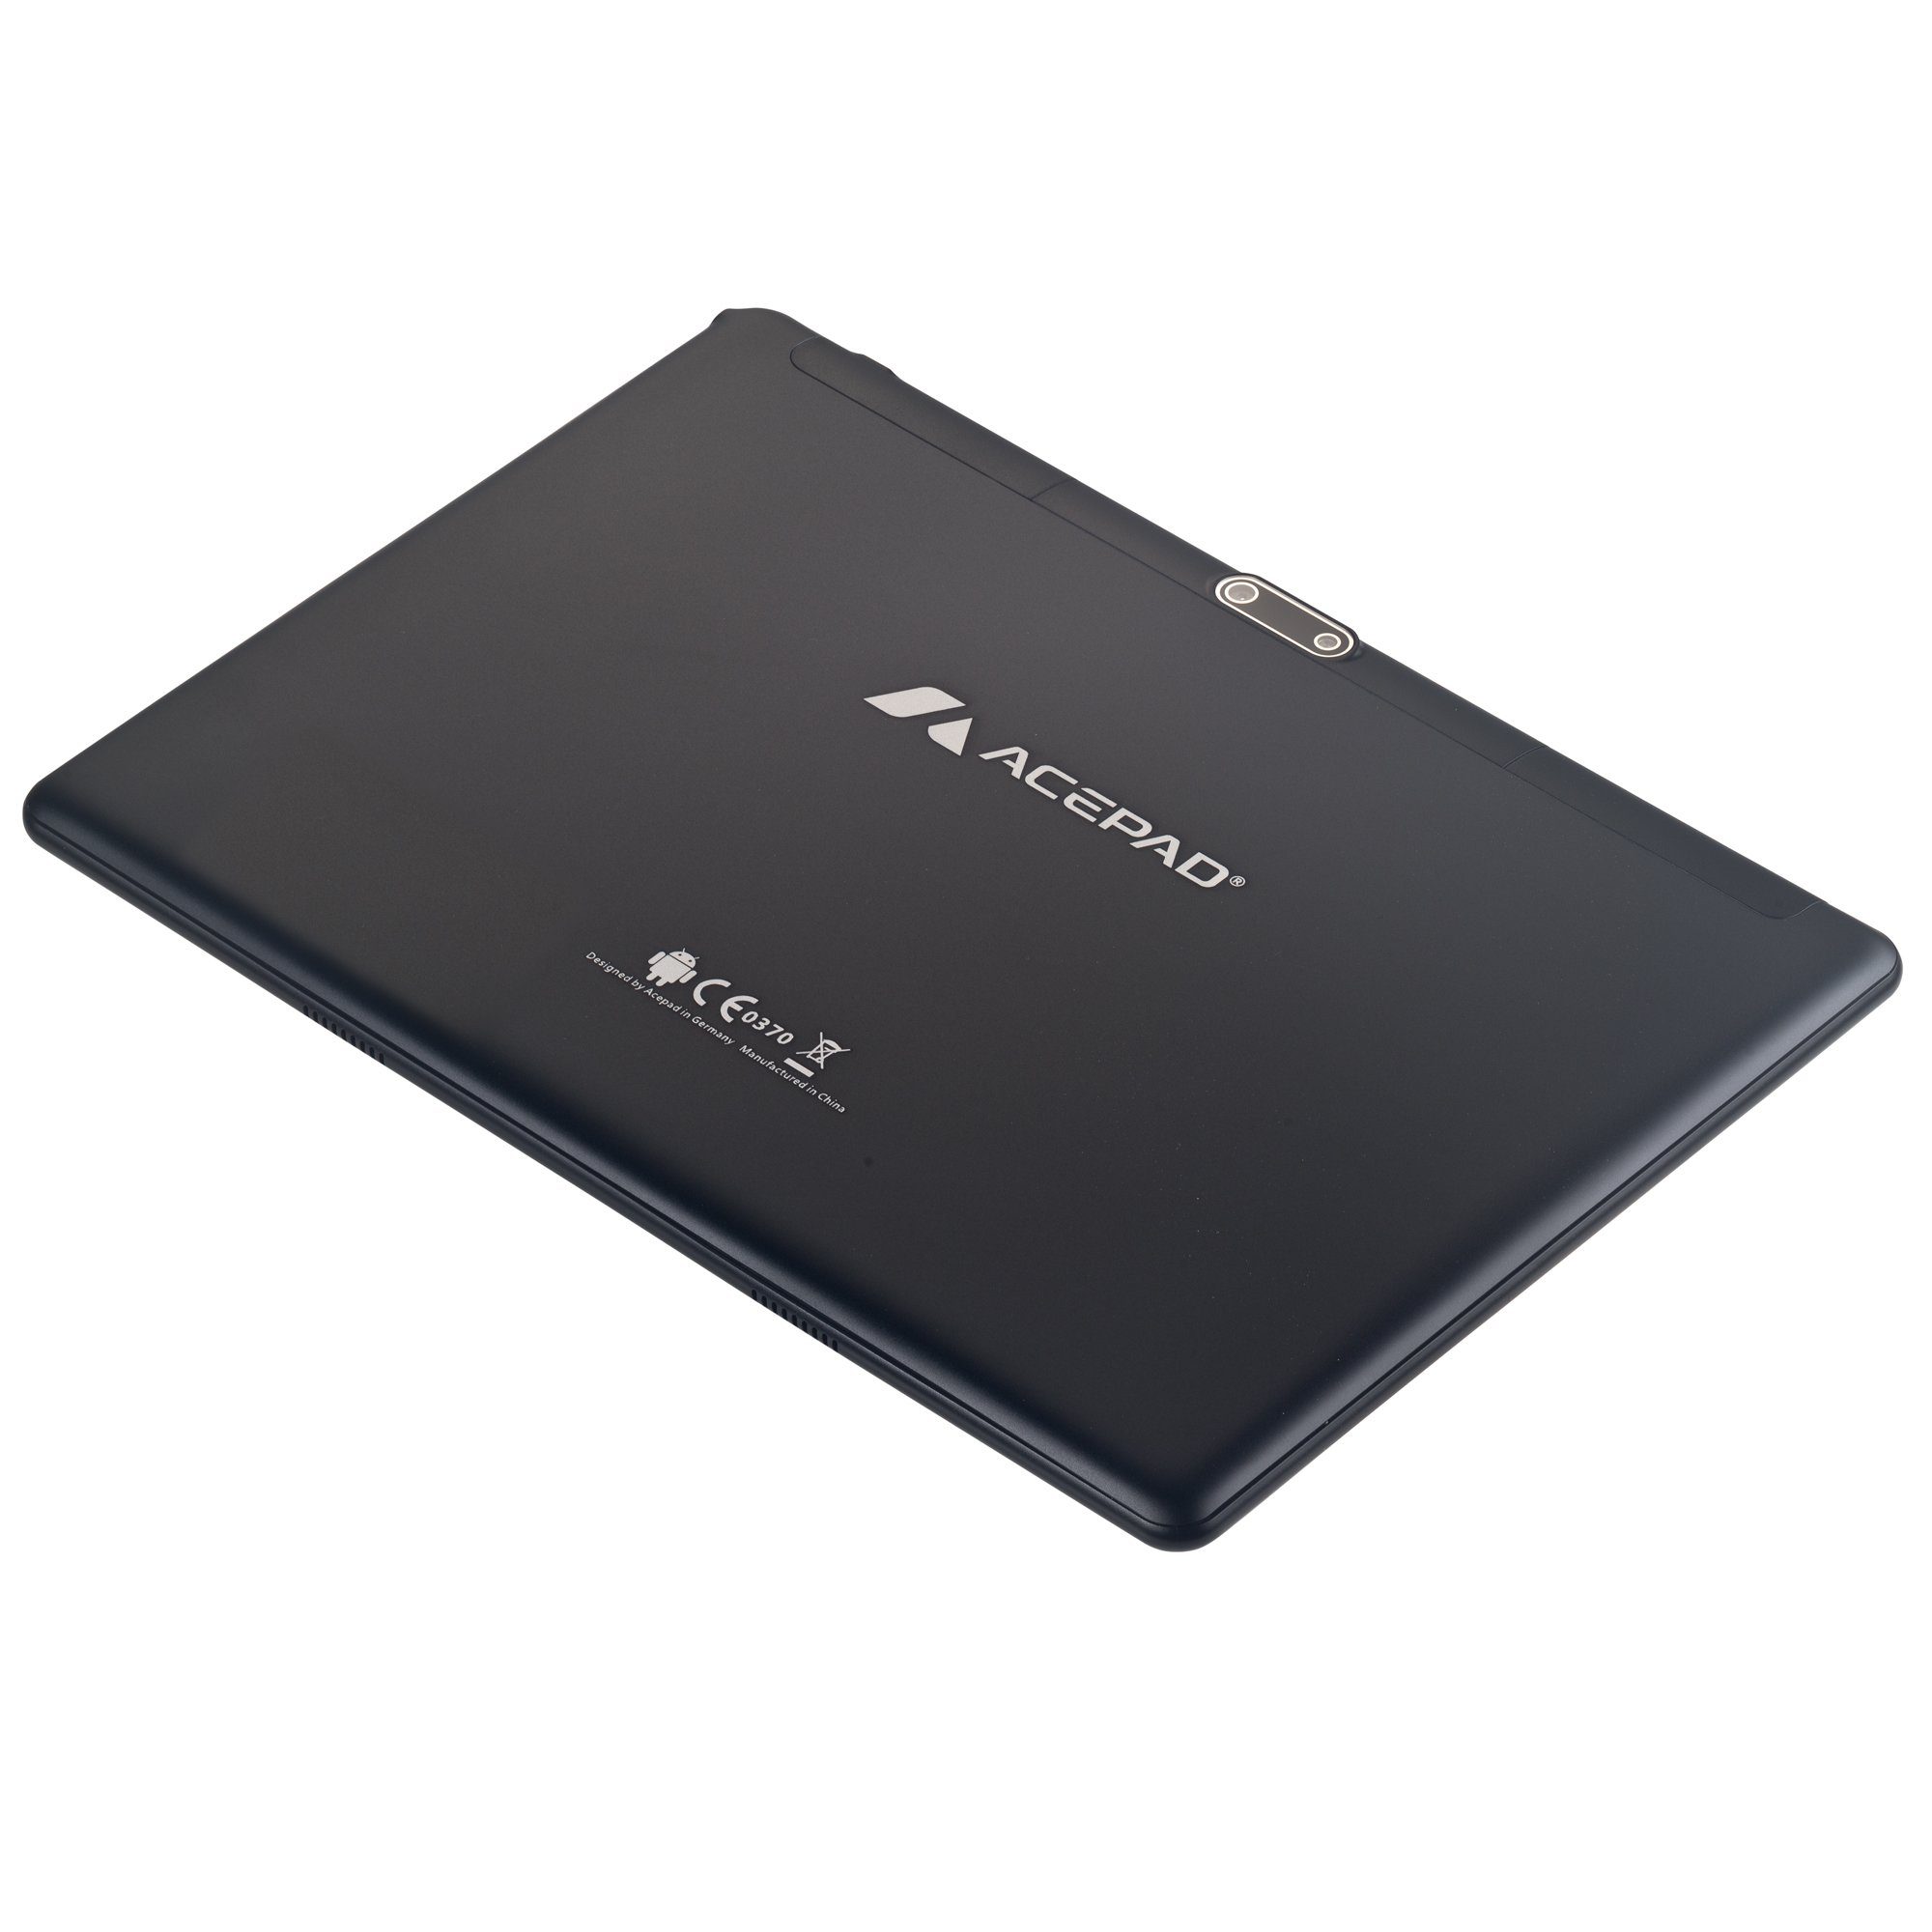 A145 4G (LTE), 128 Octa-Core, 1920x1200) Ram, 10", FHD (10.1", GB Tablet Android, Acepad Schwarz GB, Wi-Fi, Full-HD 6 v2024